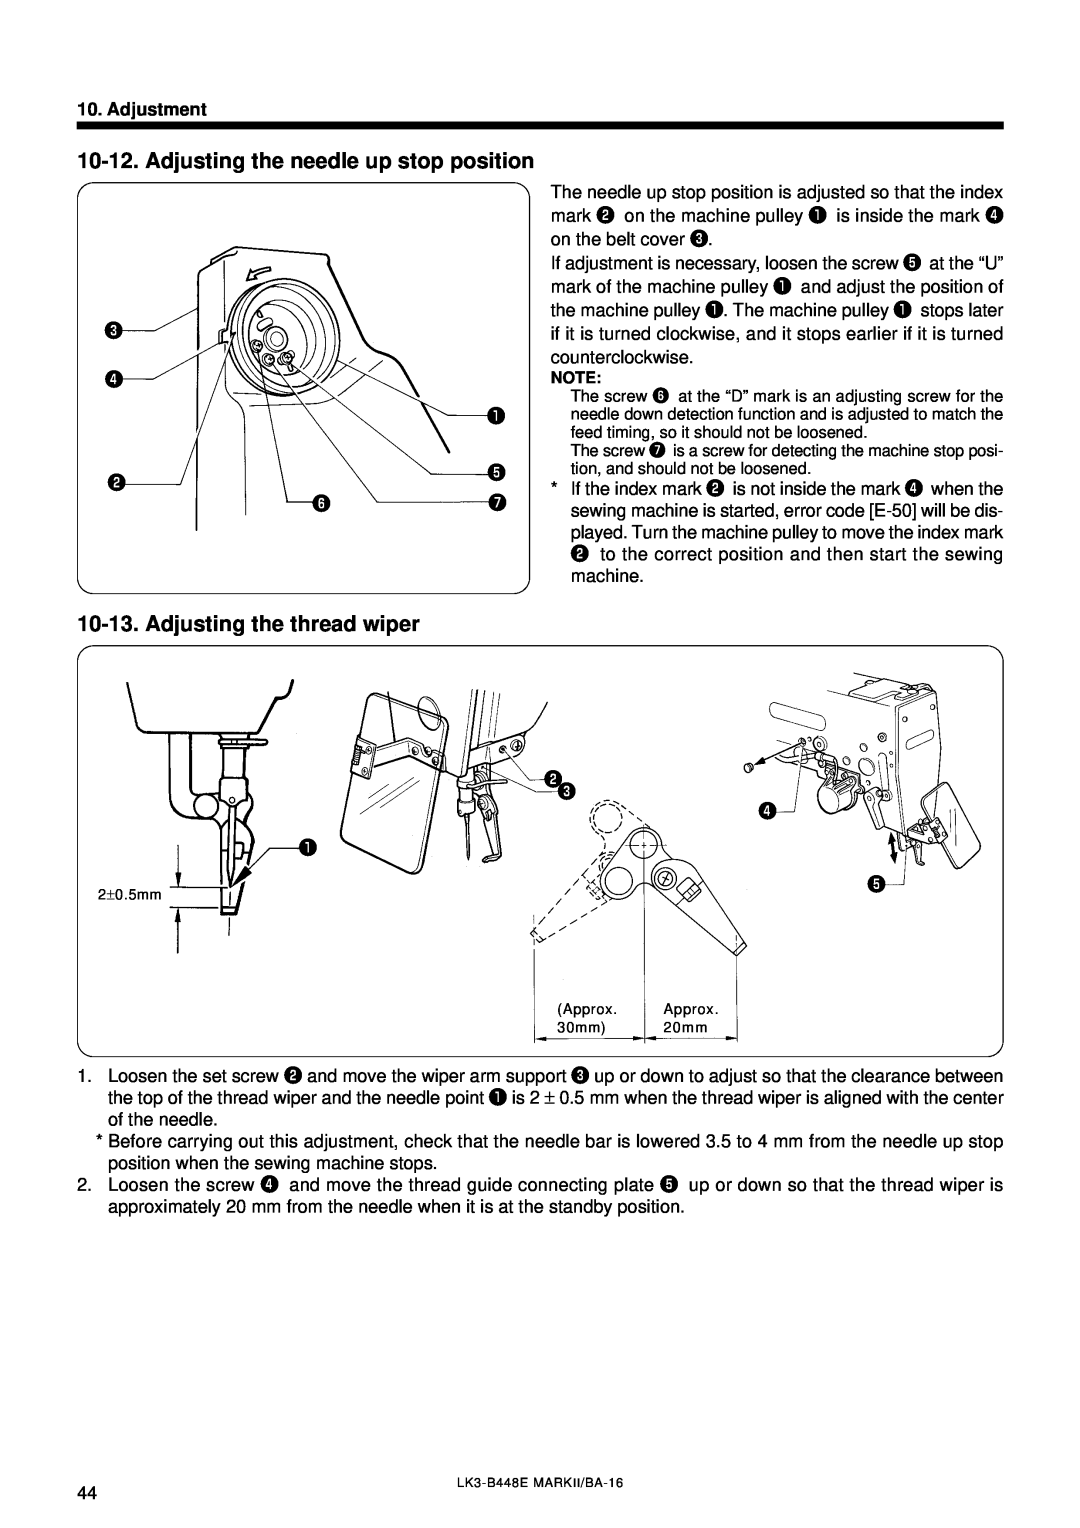 Brother LK3-B448E instruction manual Adjusting the needle up stop position, Adjusting the thread wiper, Adjustment 